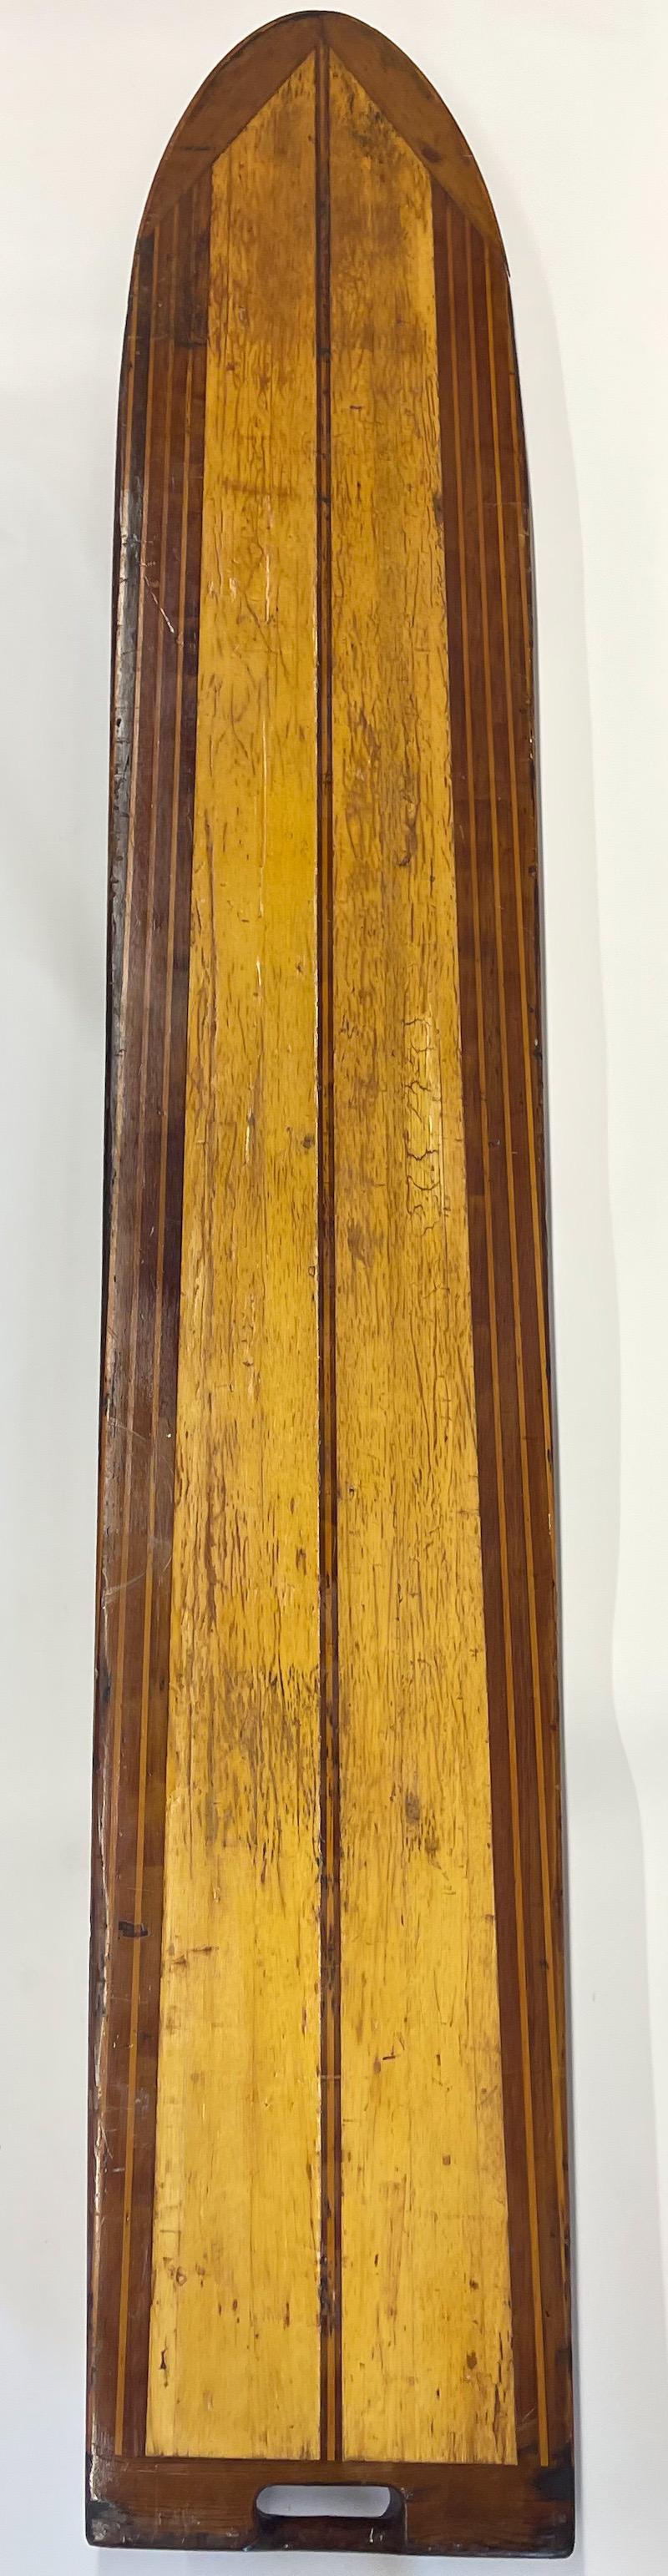 vintage wooden surfboard